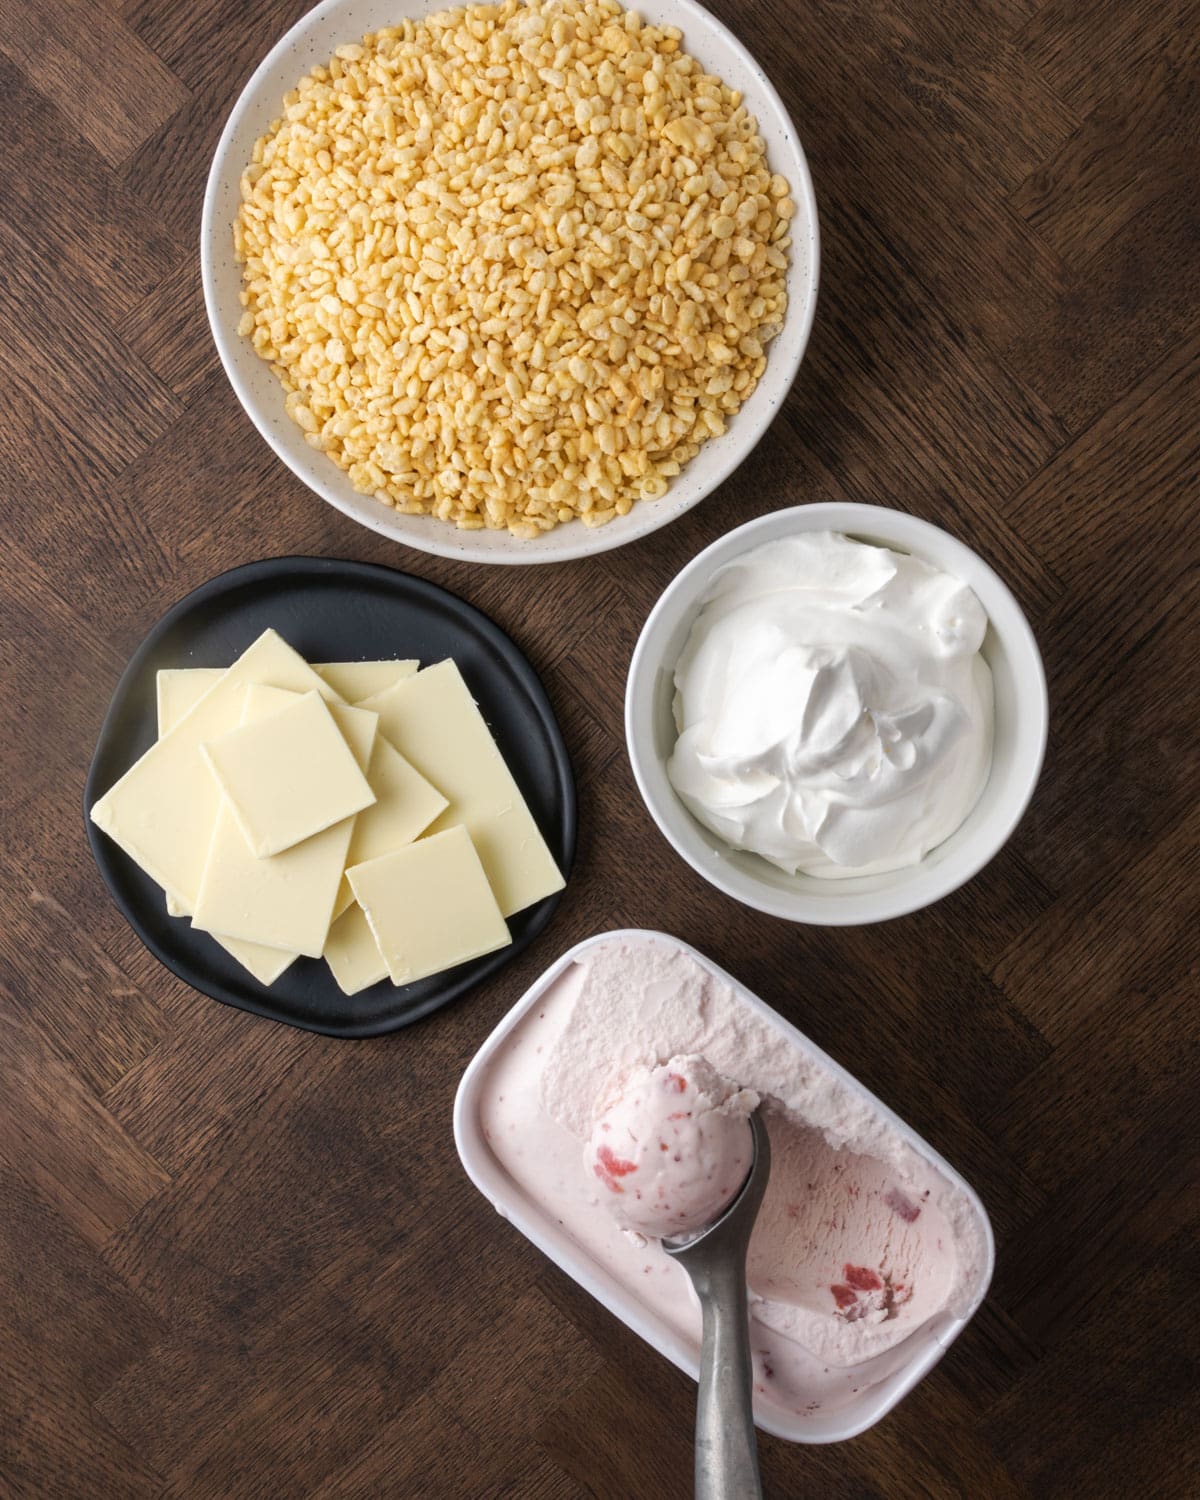 The ingredients for Krispie Treat ice cream pie.